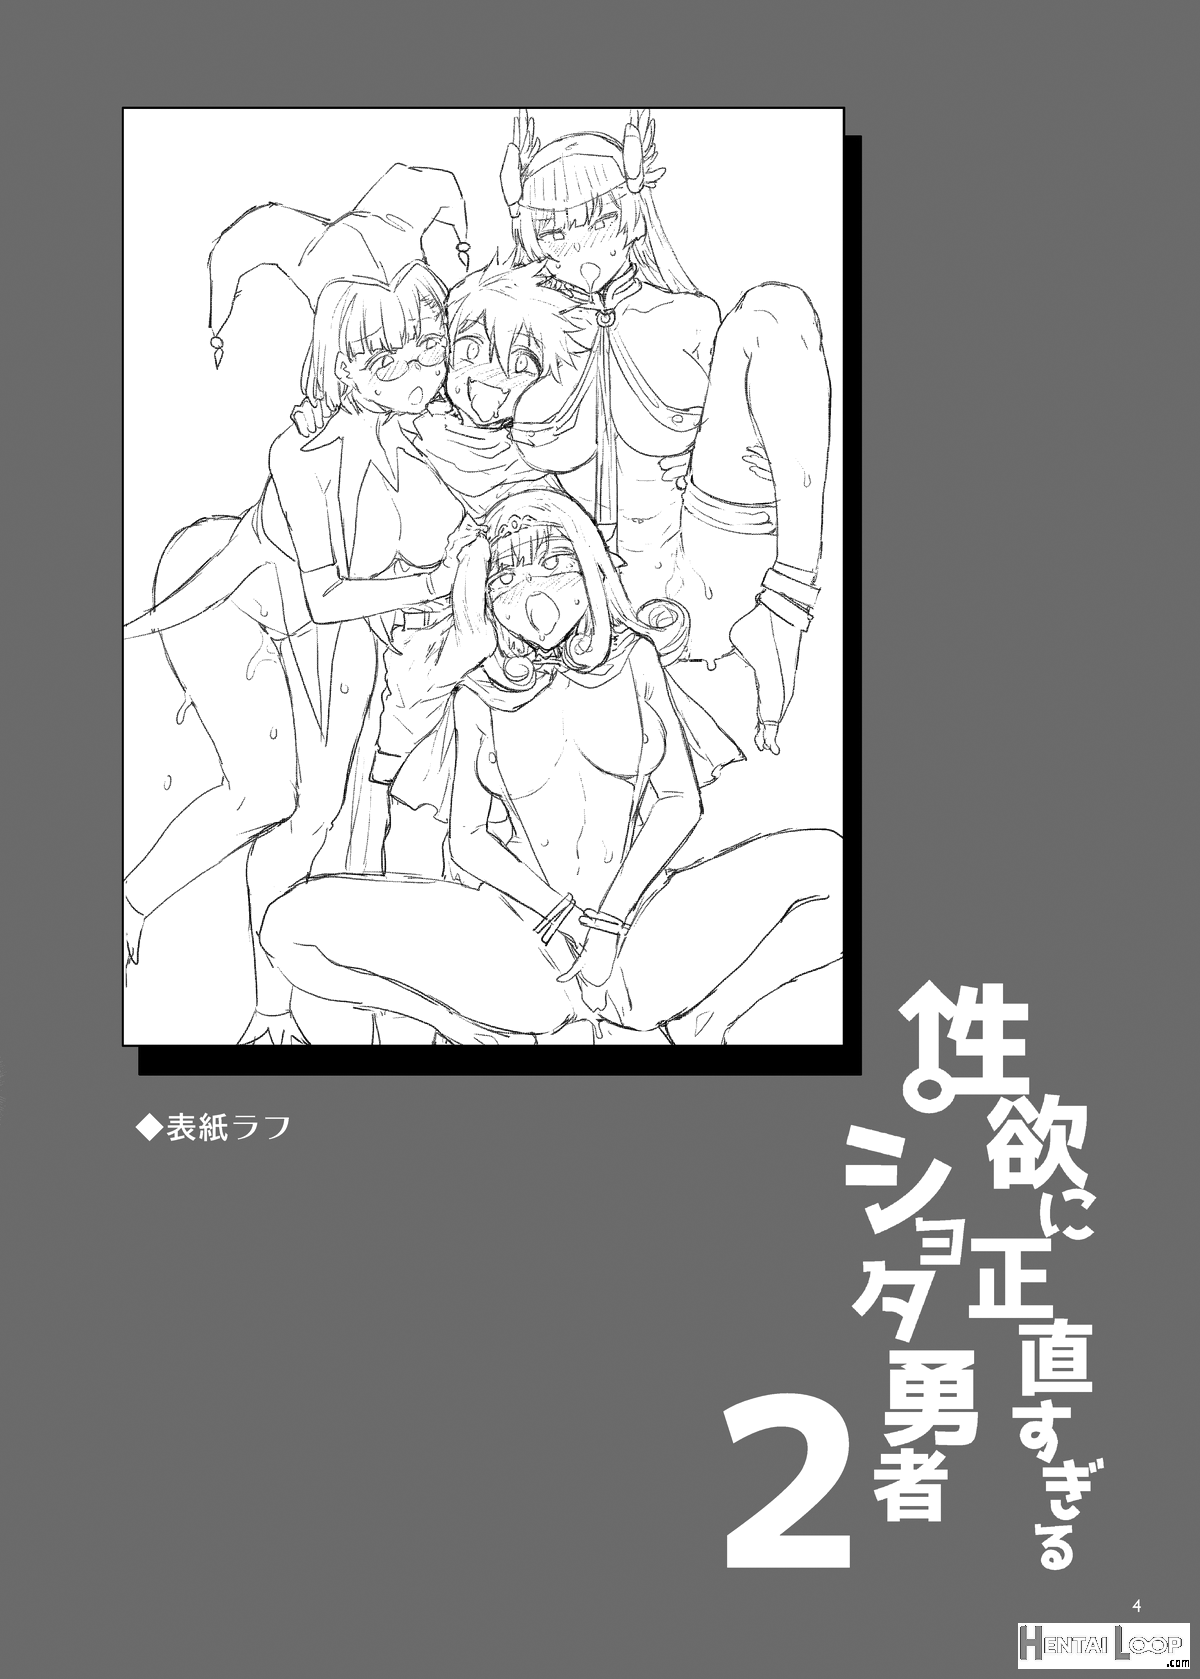 Sexually Over-honest Shota Hero 2 page 5